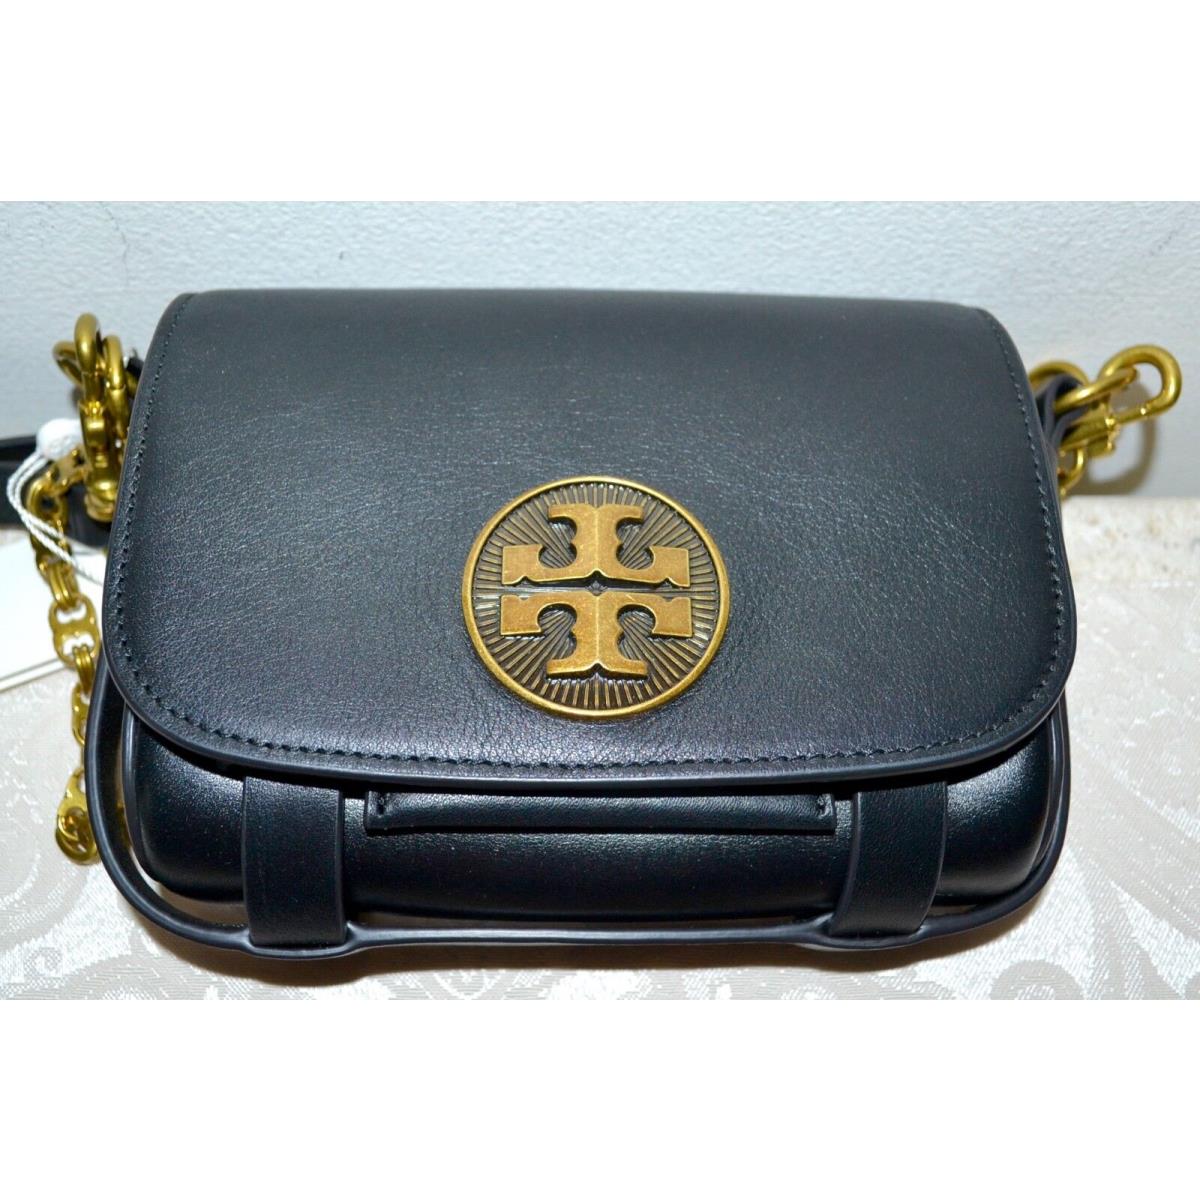 Tory Burch Sml Alastair Caged Black Leather Shoulder Bag/clutch - Tory Burch  bag - 085704373568 | Fash Brands